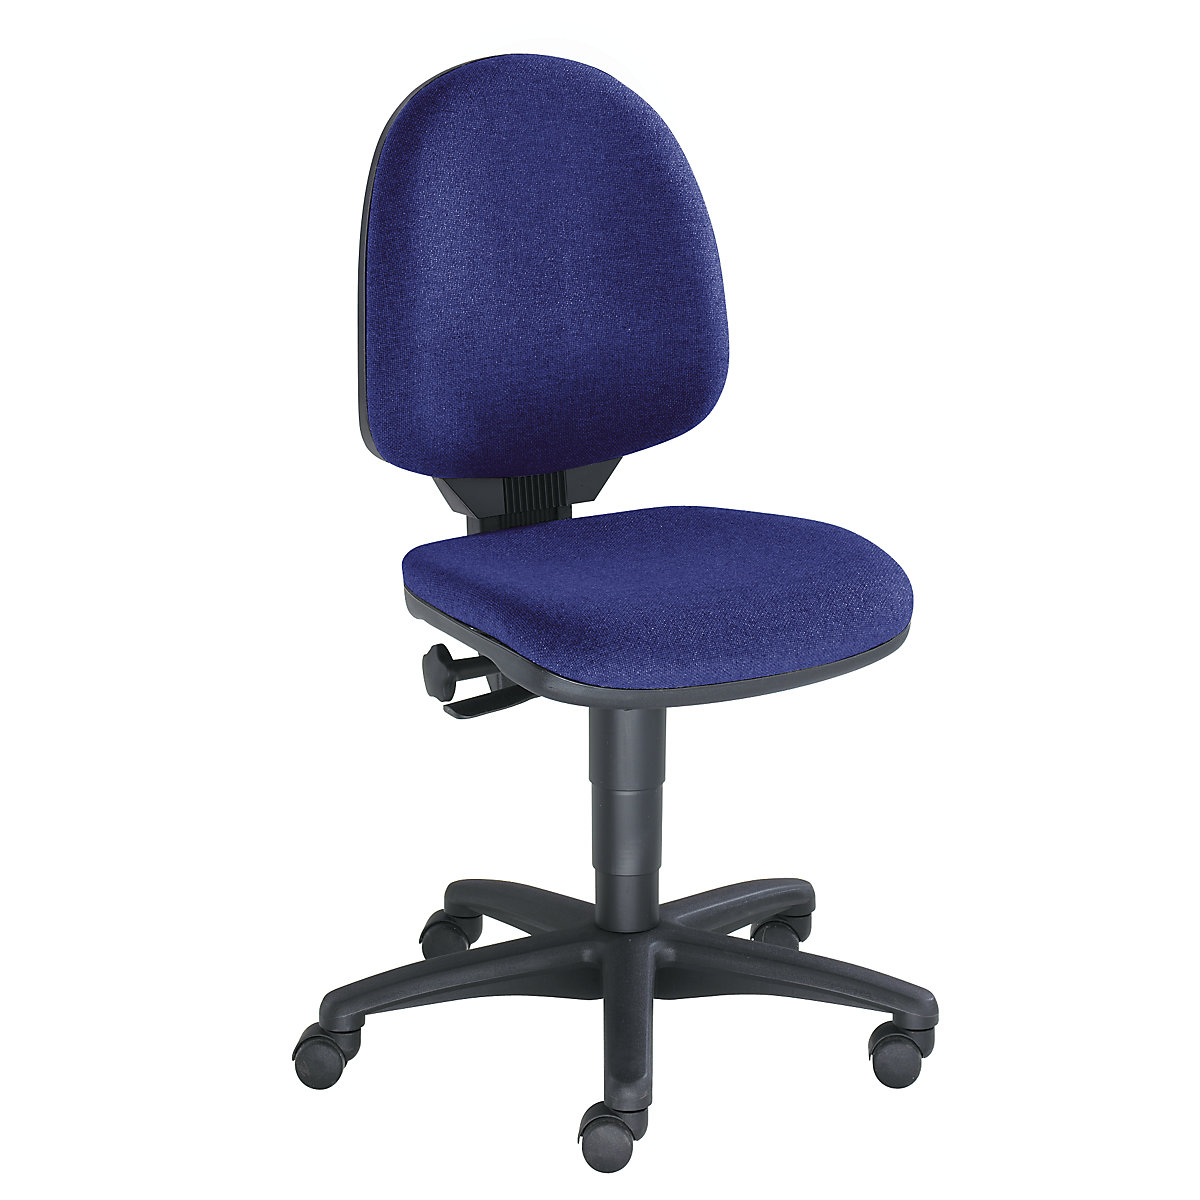 Standaarddraaistoel – Topstar, zonder armleuningen, textielbekleding blauw, stoelframe zwart-5